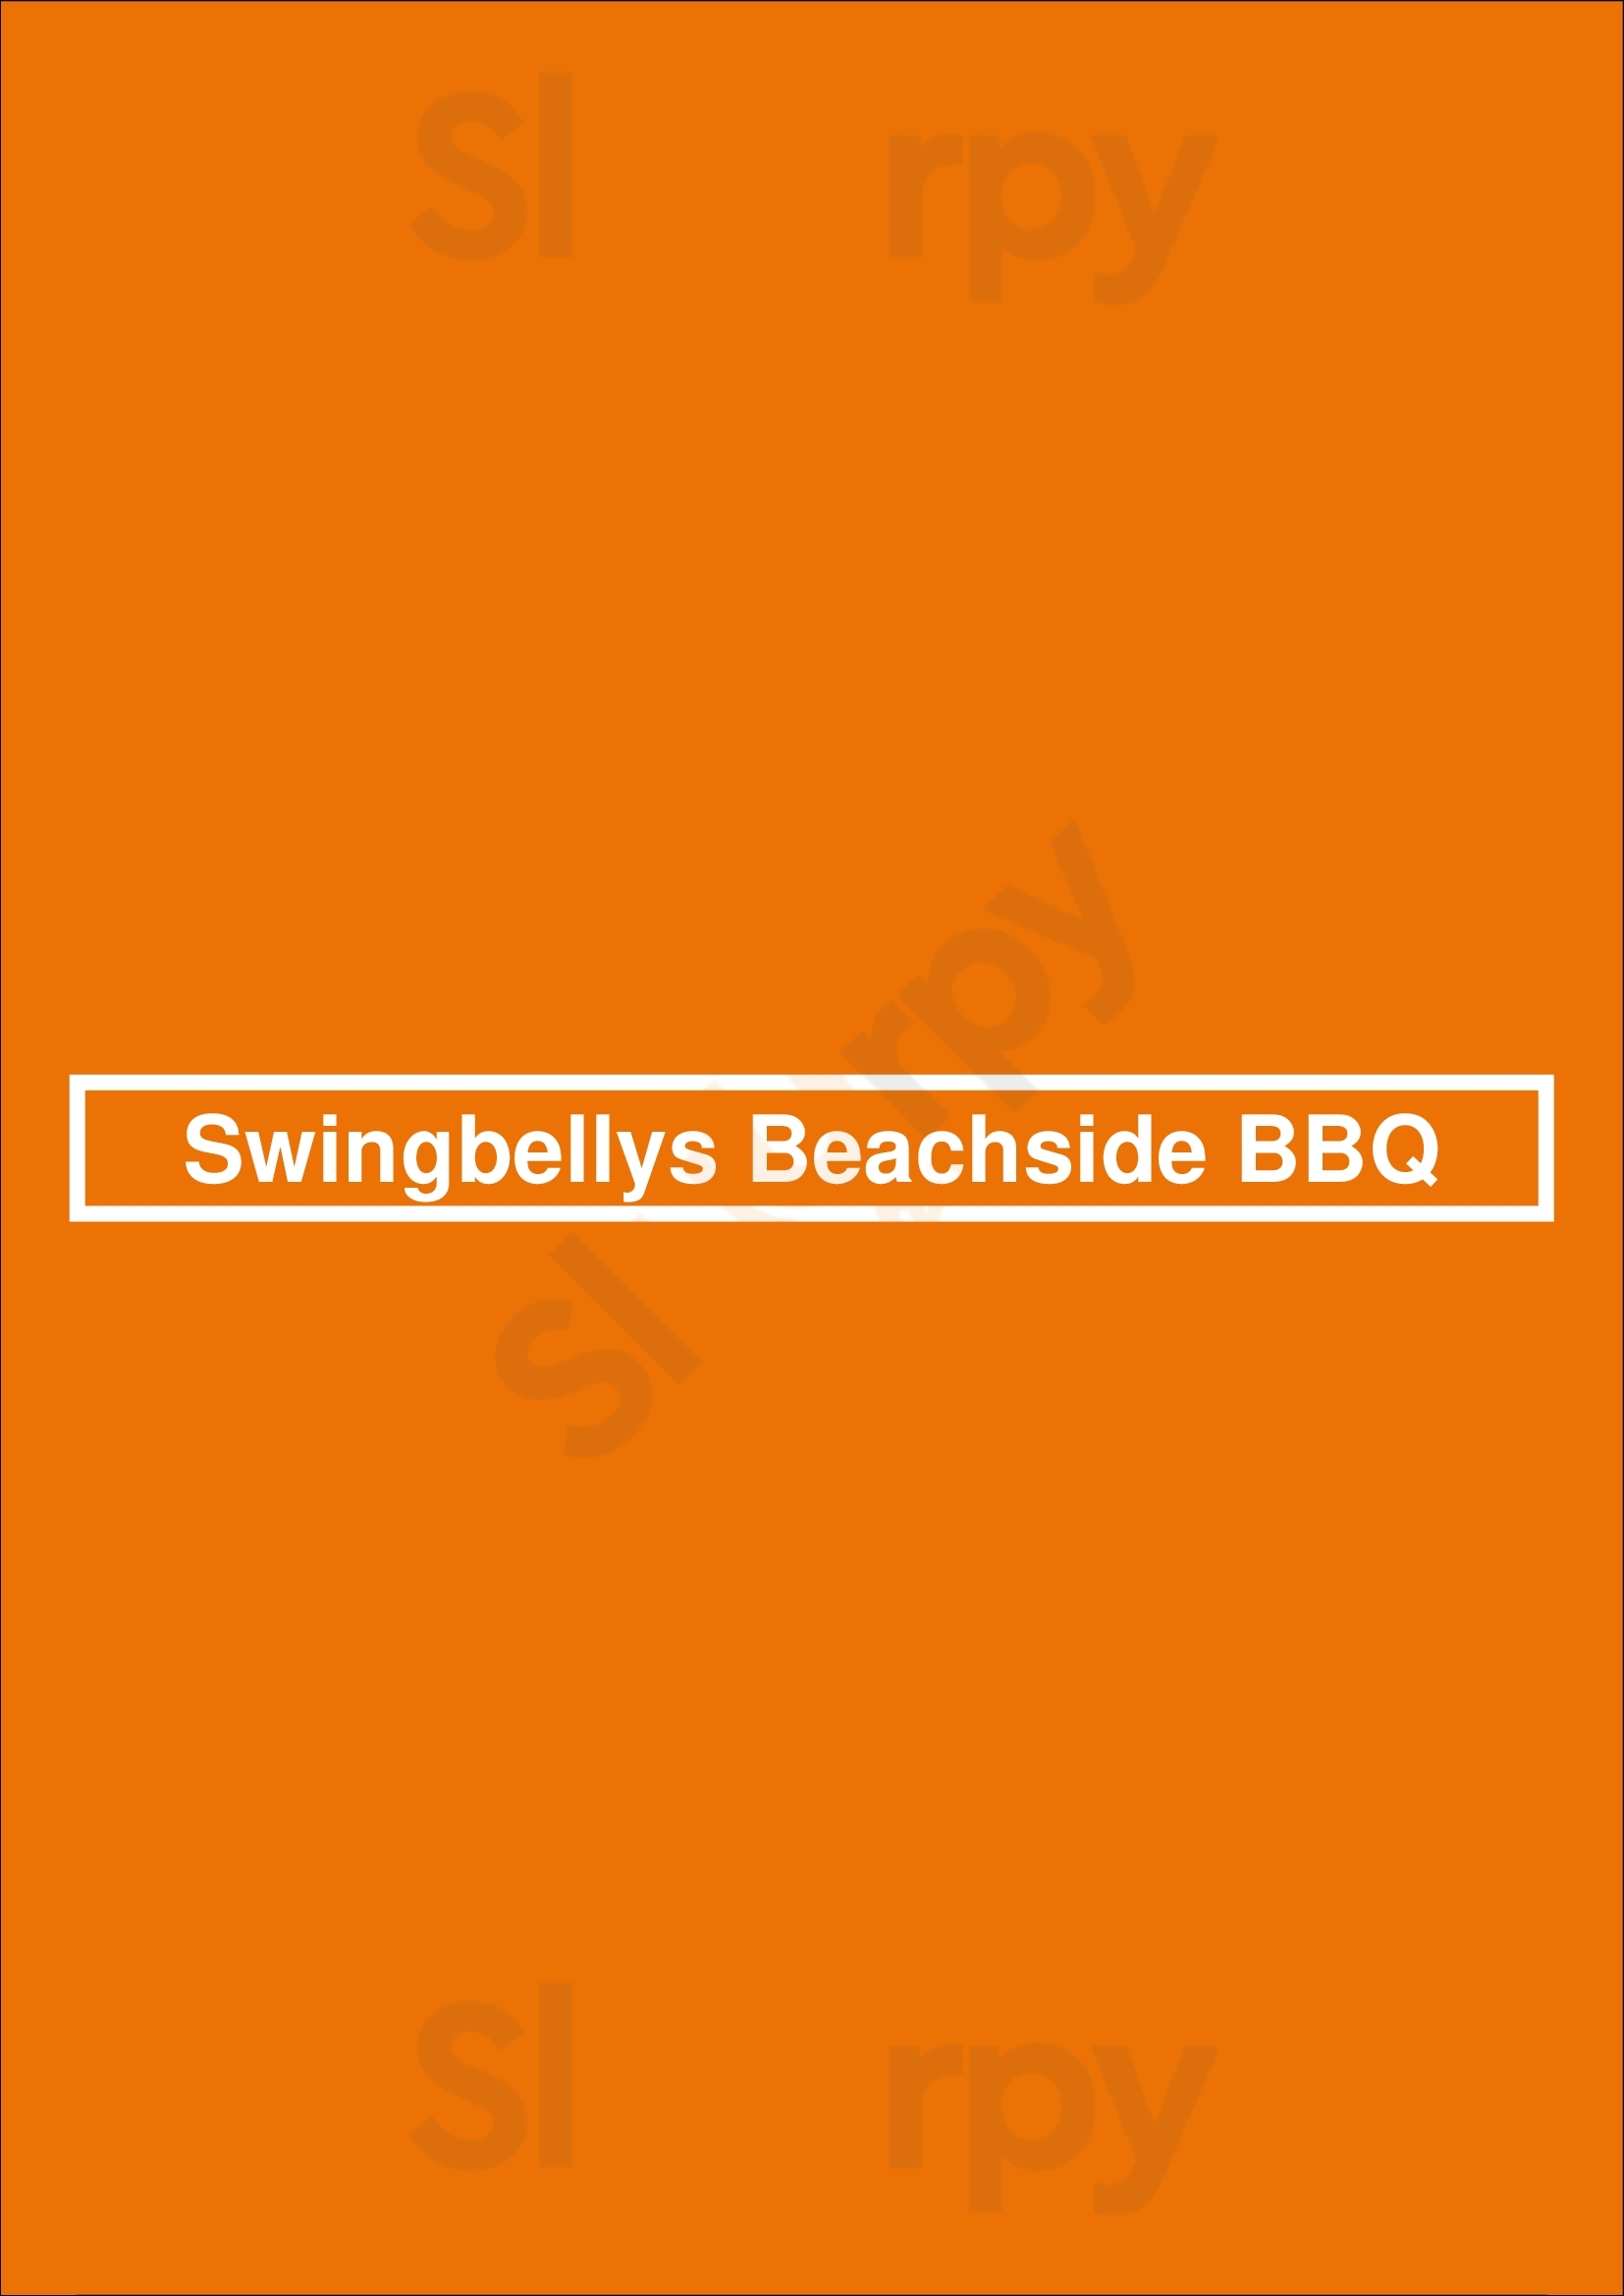 Swingbellys Beachside Bbq Long Beach Menu - 1